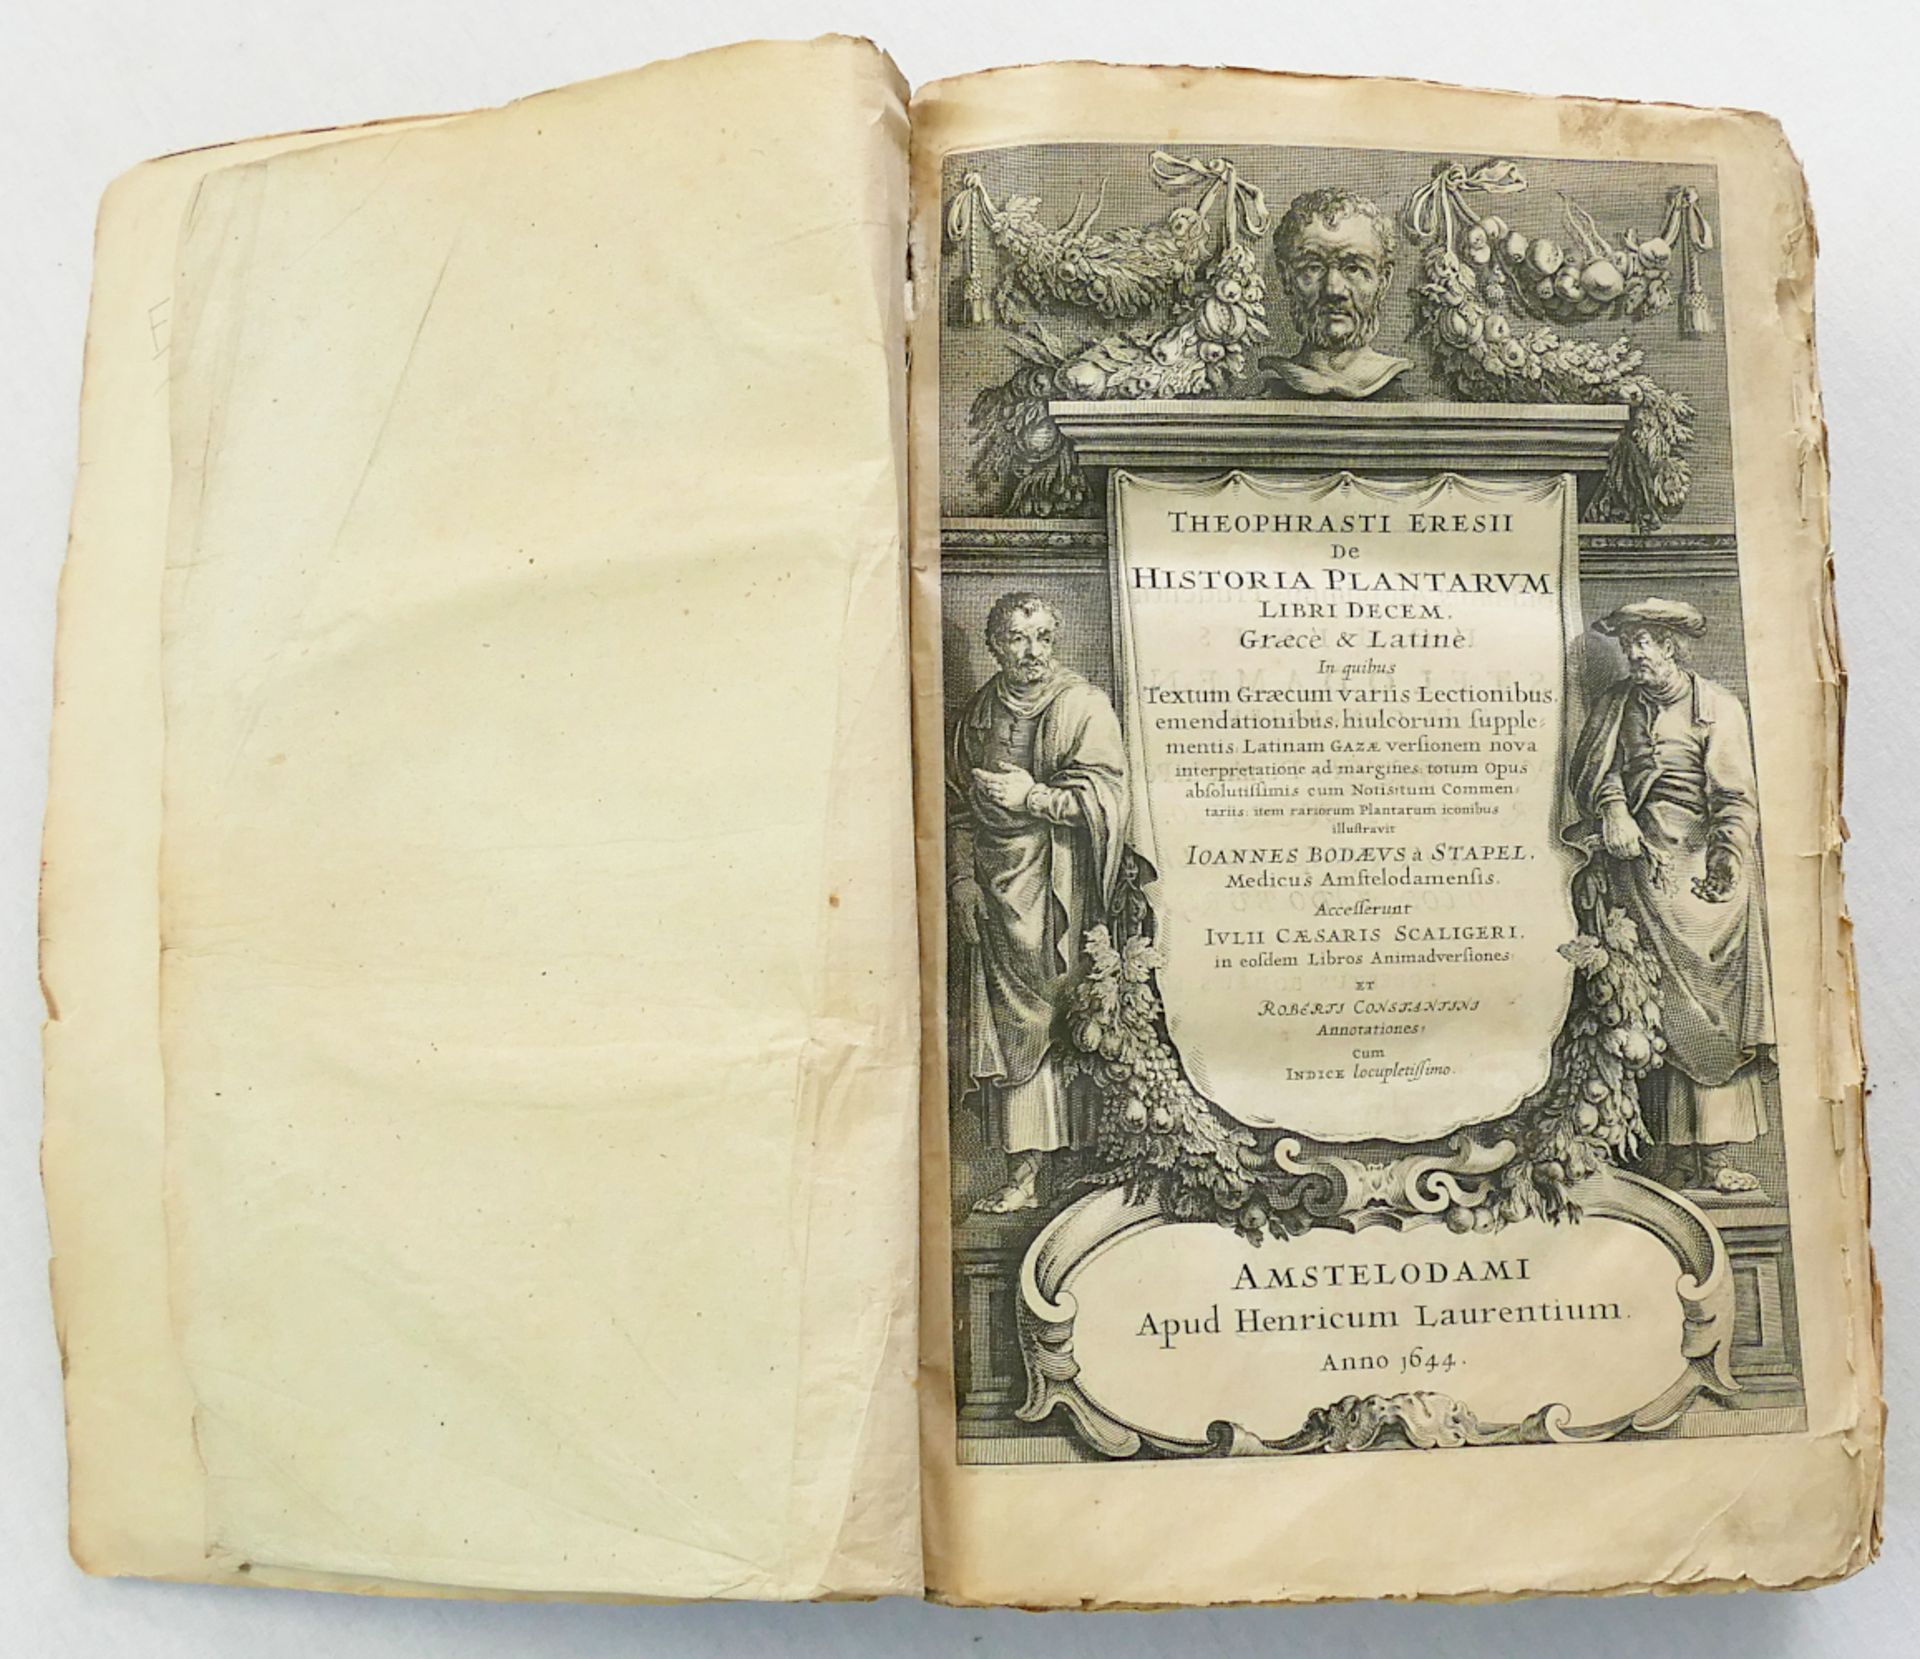 1 Buch "Theophrasti Eresii De historia plantarum" von Johannes BODAEUS, Amsterdam 1644, ca. 1187 Sei